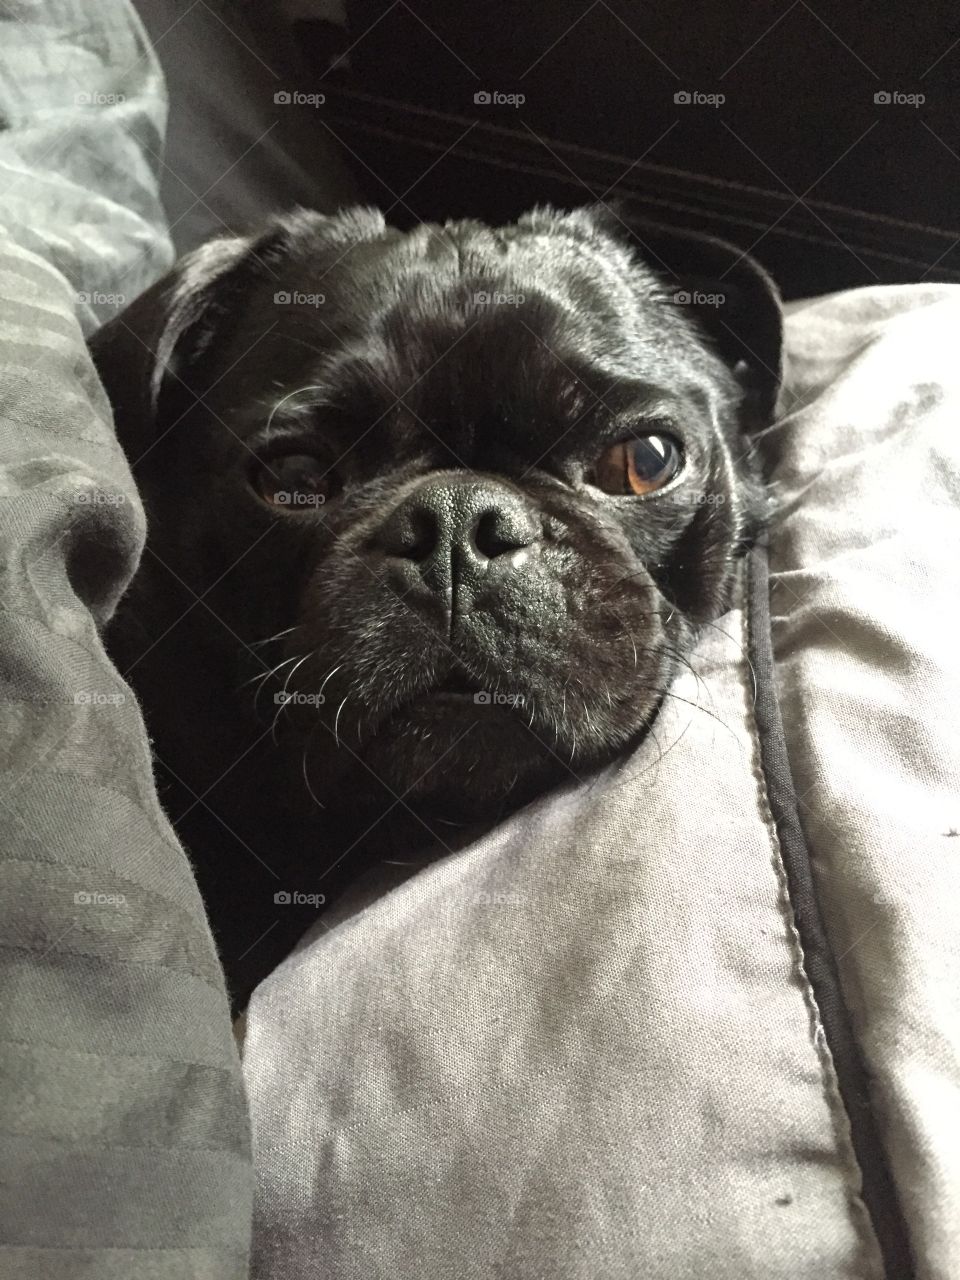 Black Pug Dog Face Hiding in Pillows Close Up